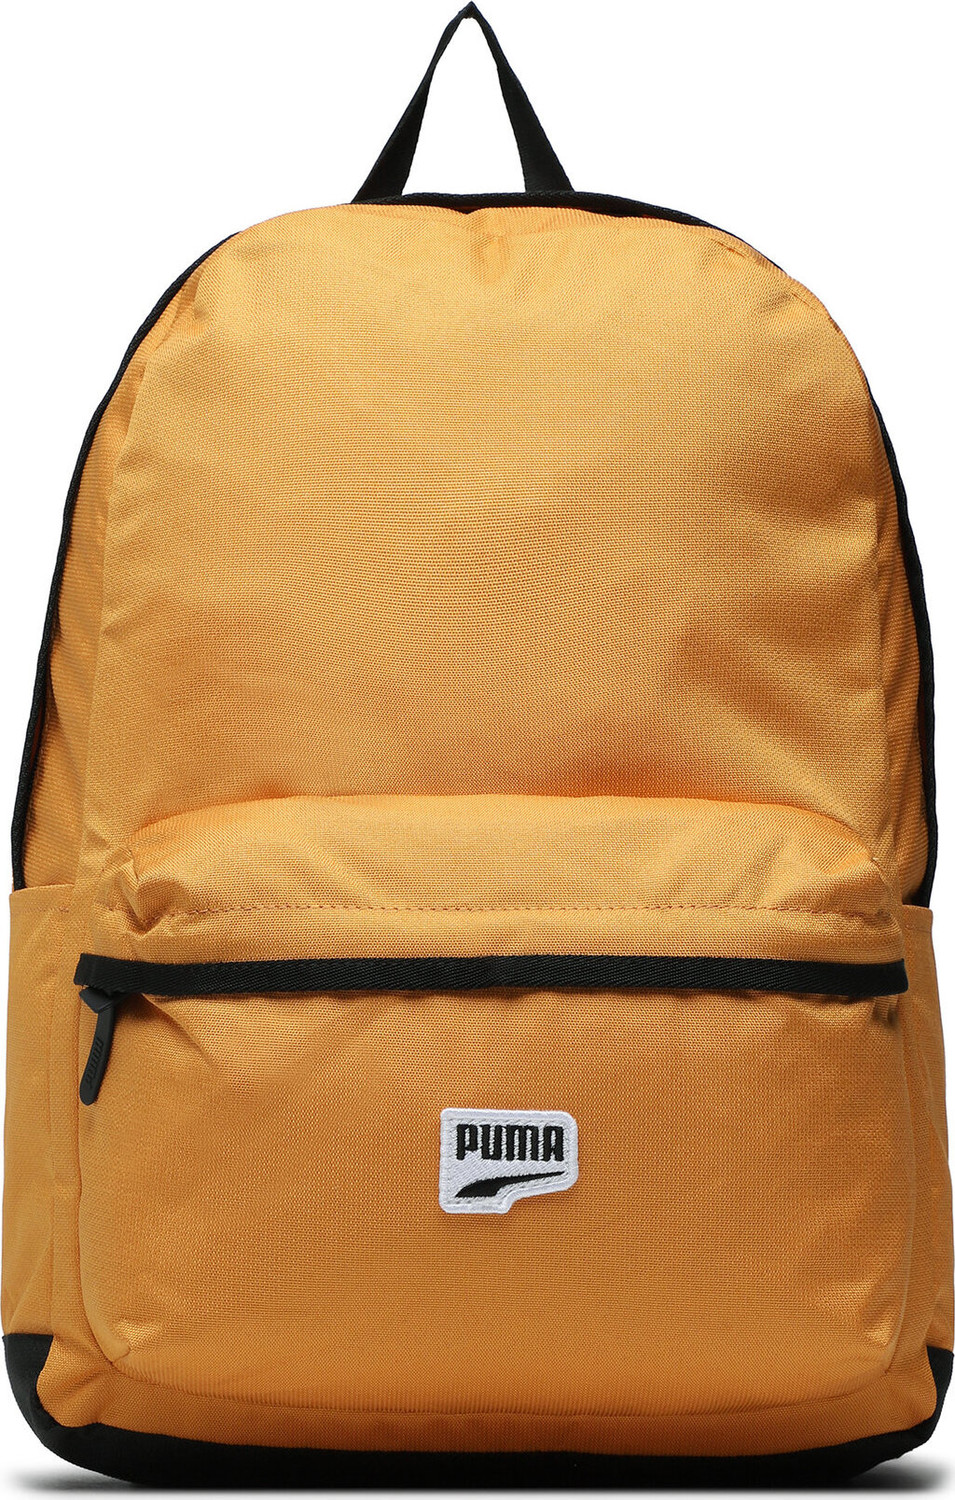 Batoh Puma Downtown Backpack 079659 02 Desert Clay